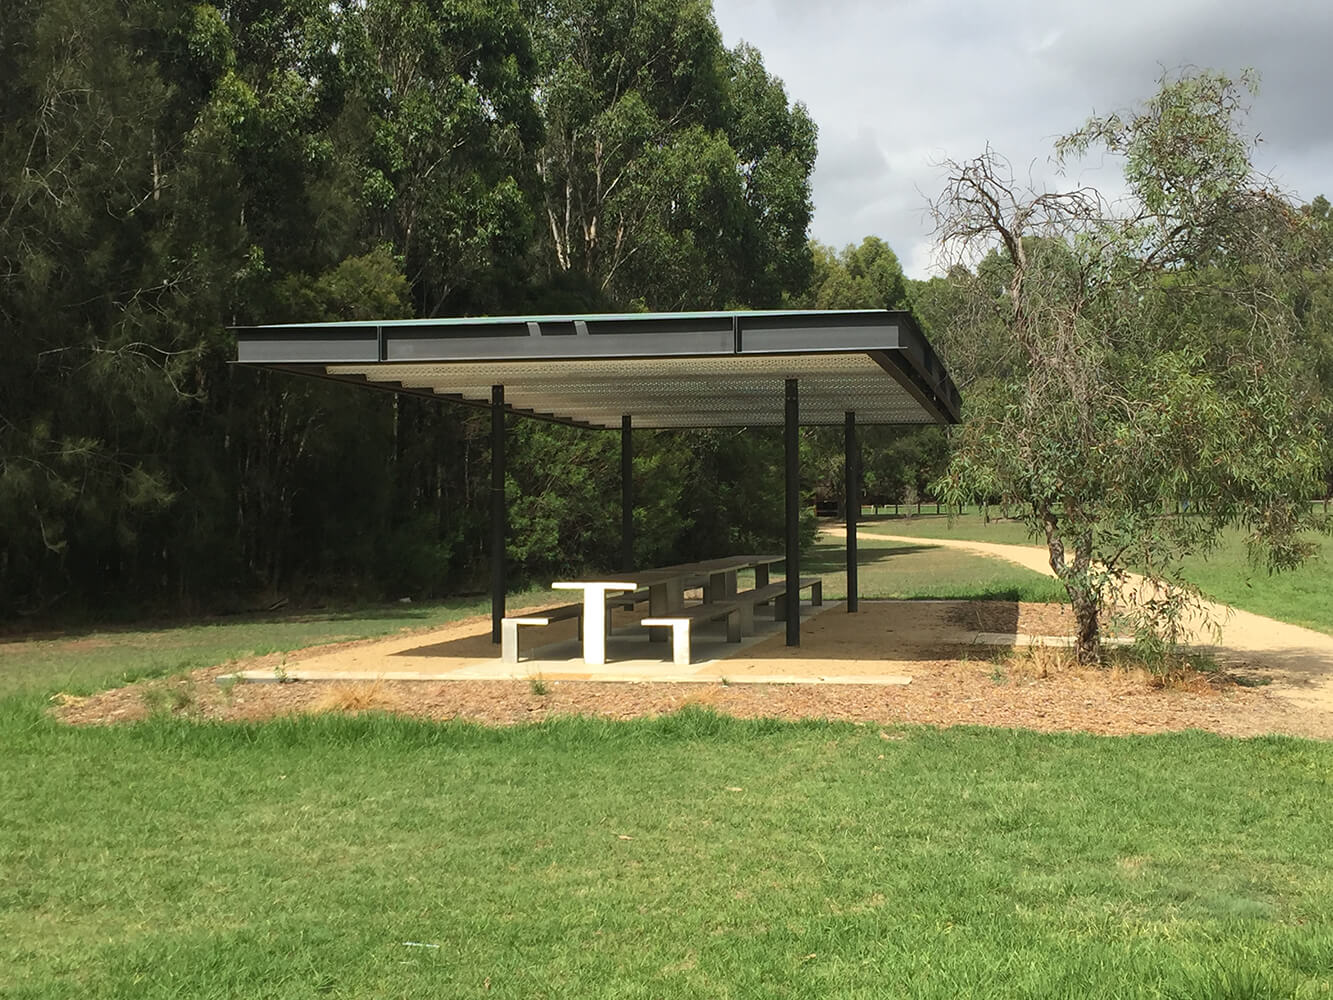 Parramatta Park Shelters and Amenities